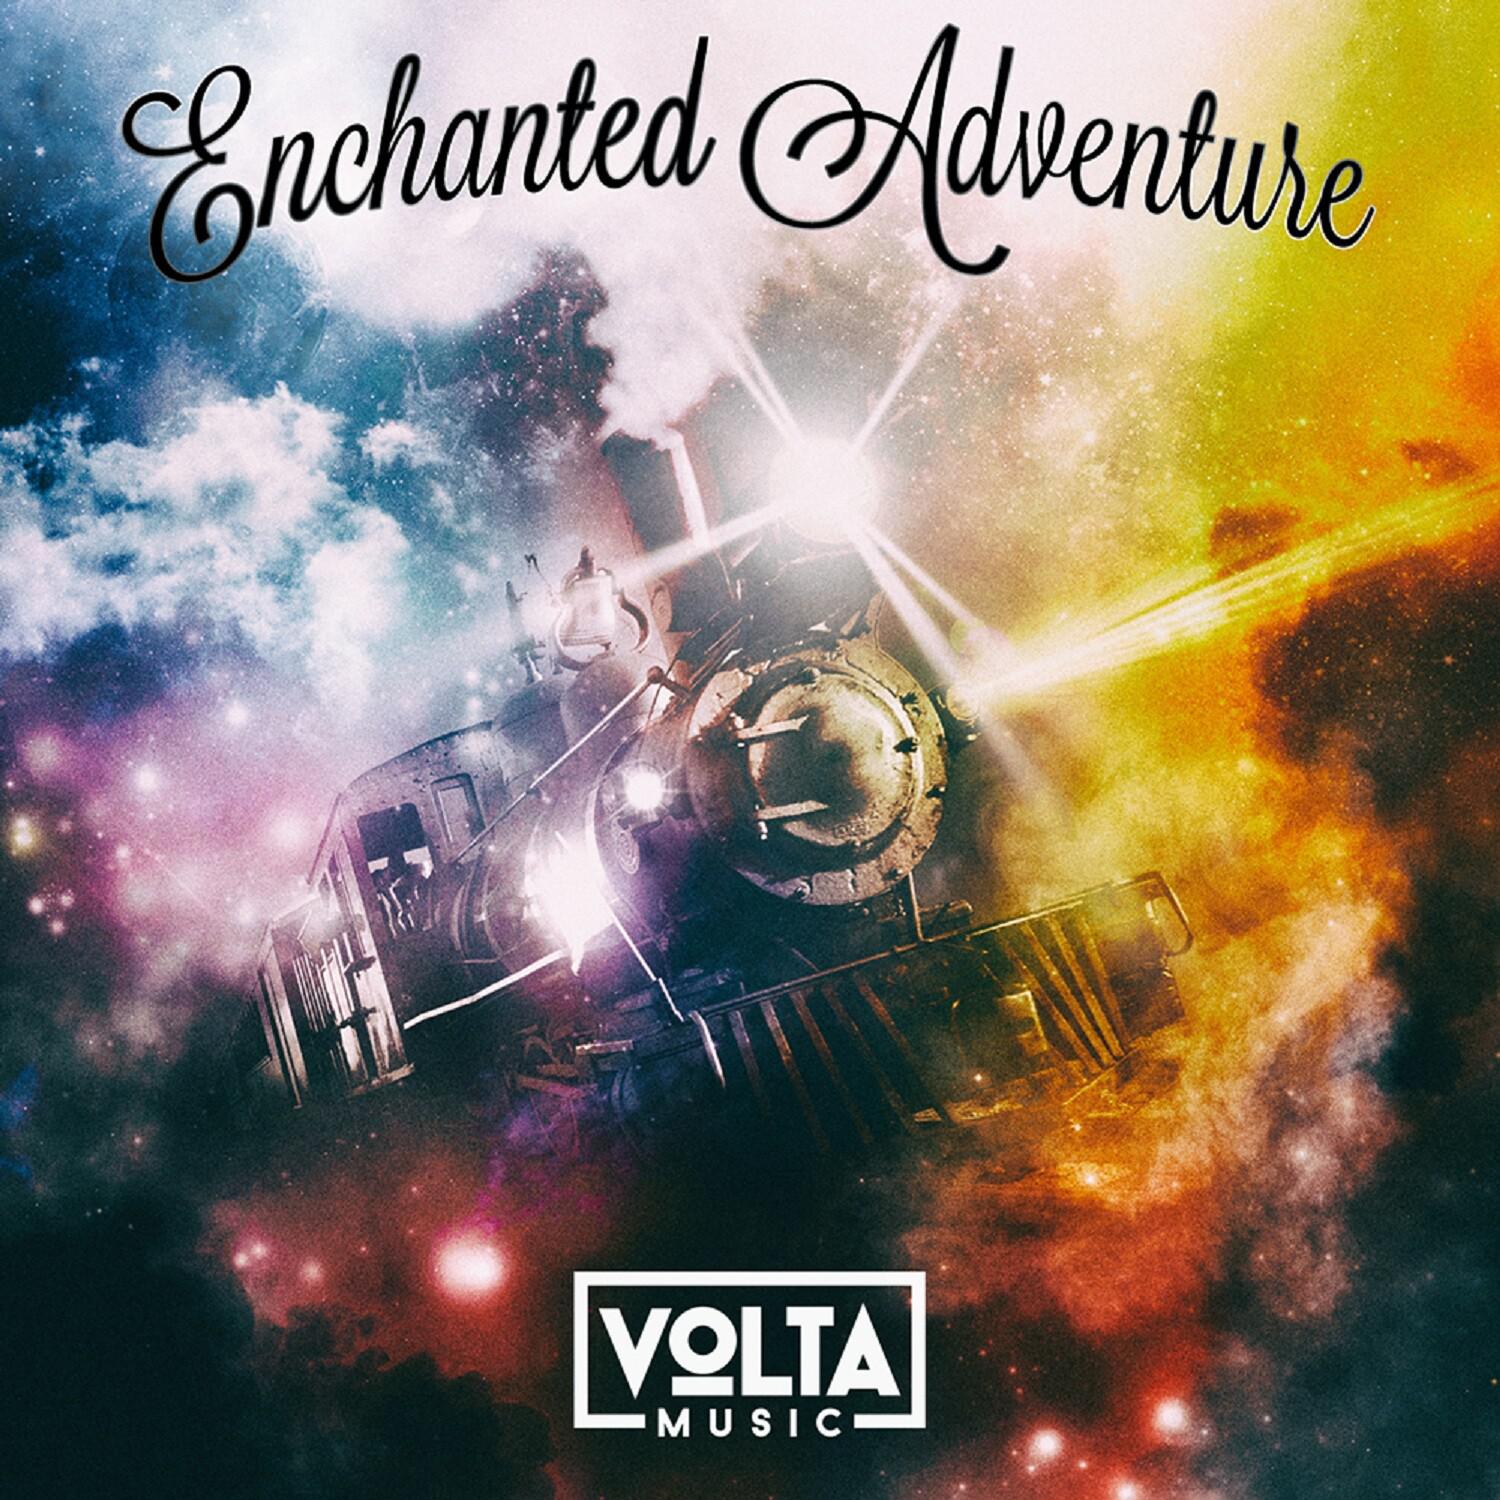 Volta Music: Enchanted Adventure